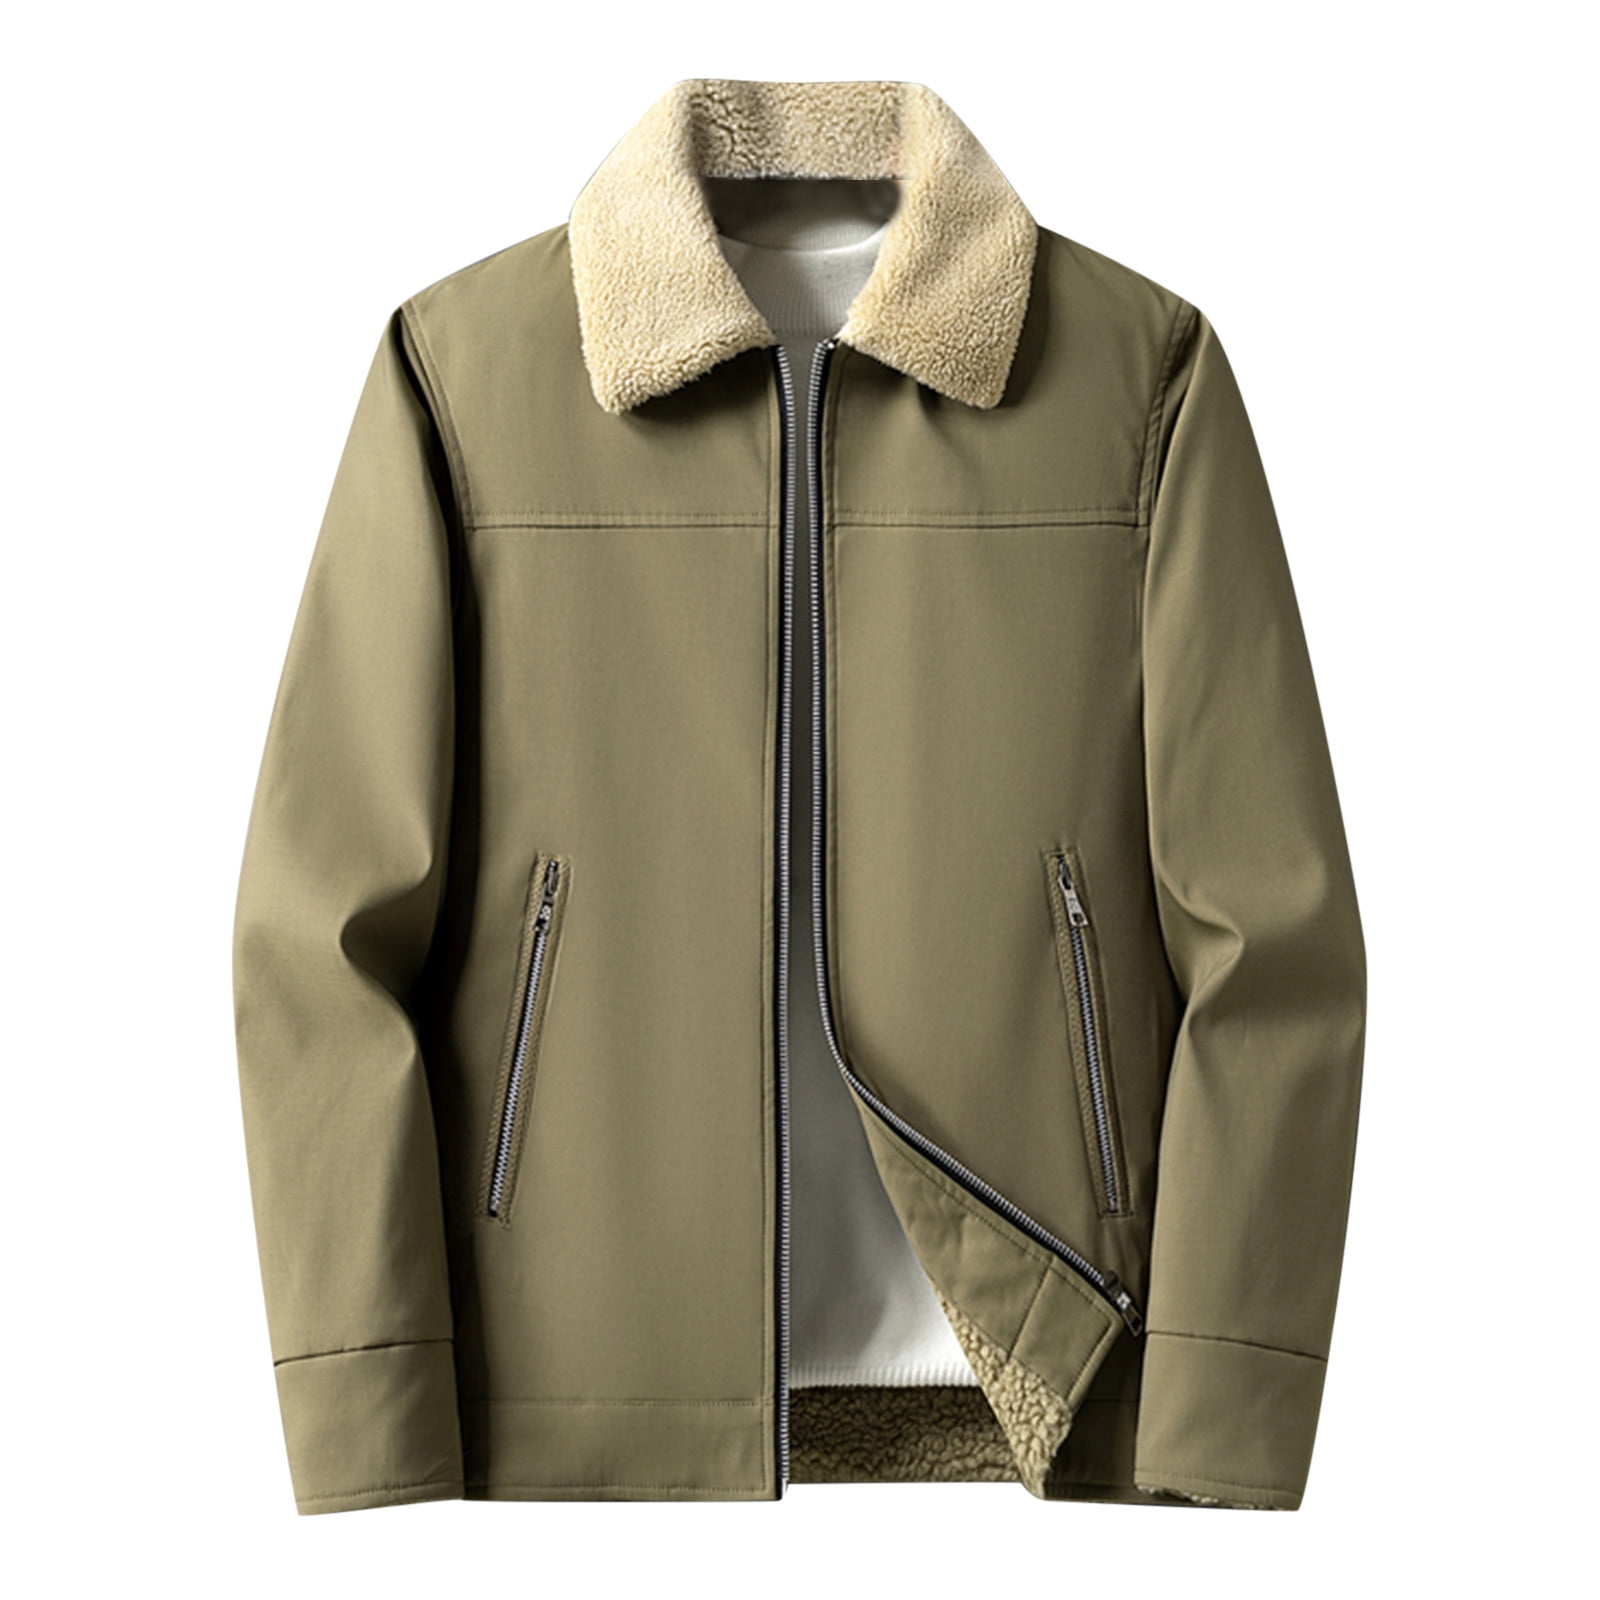 YFPWM Trench Coat for Men with Hood Biker Coat Flannel Lined Jacket ...